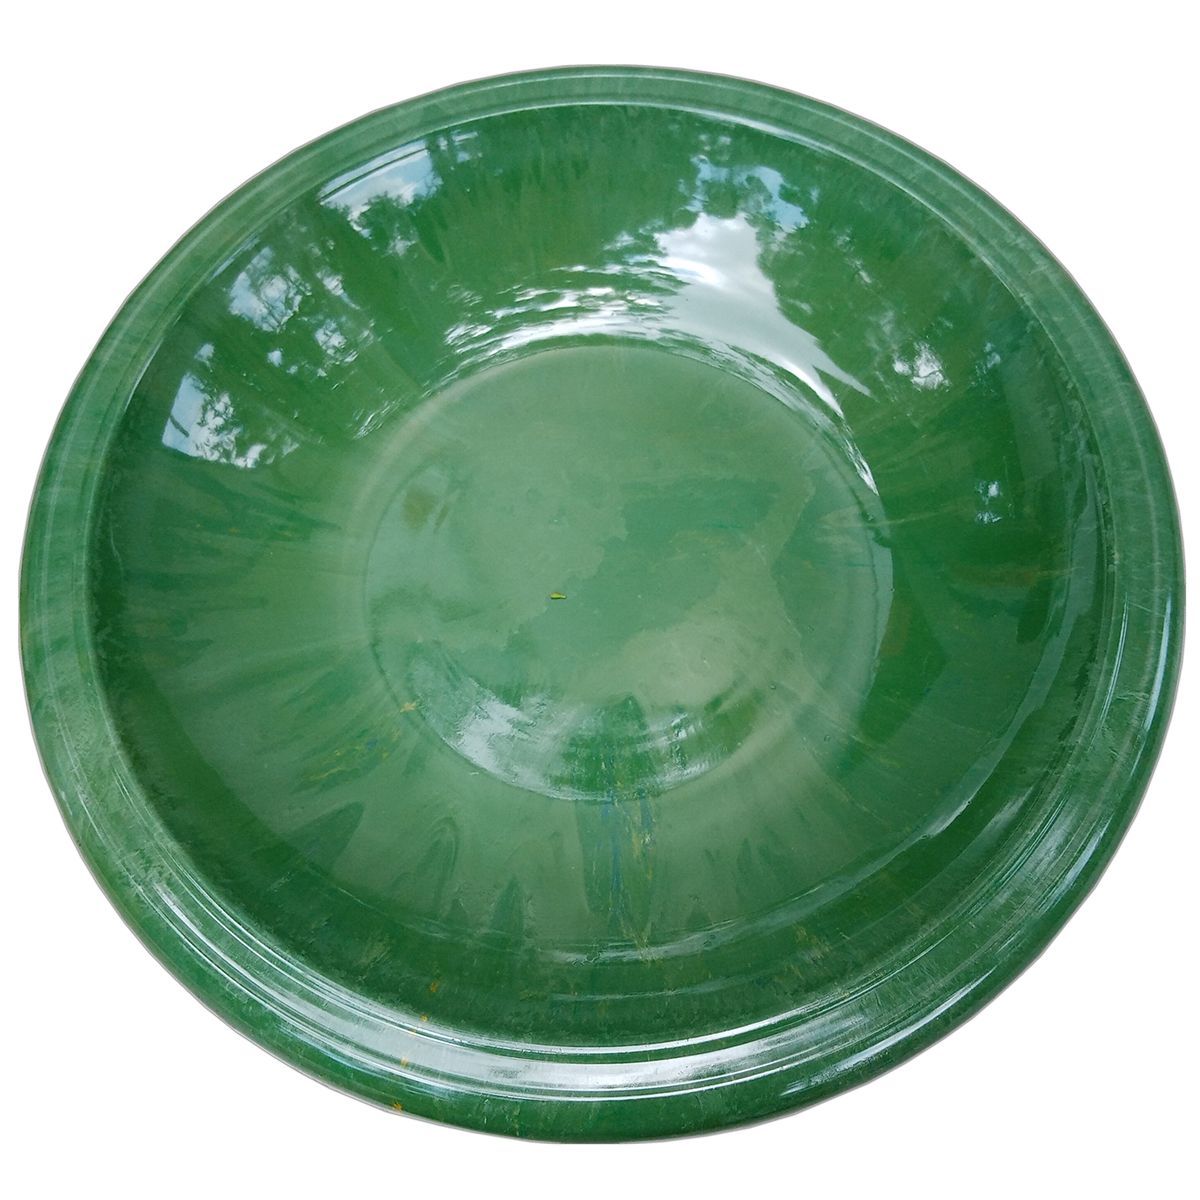 Tdi41900t Gloss Bird Bowl With Gloss Rim, Kale Green